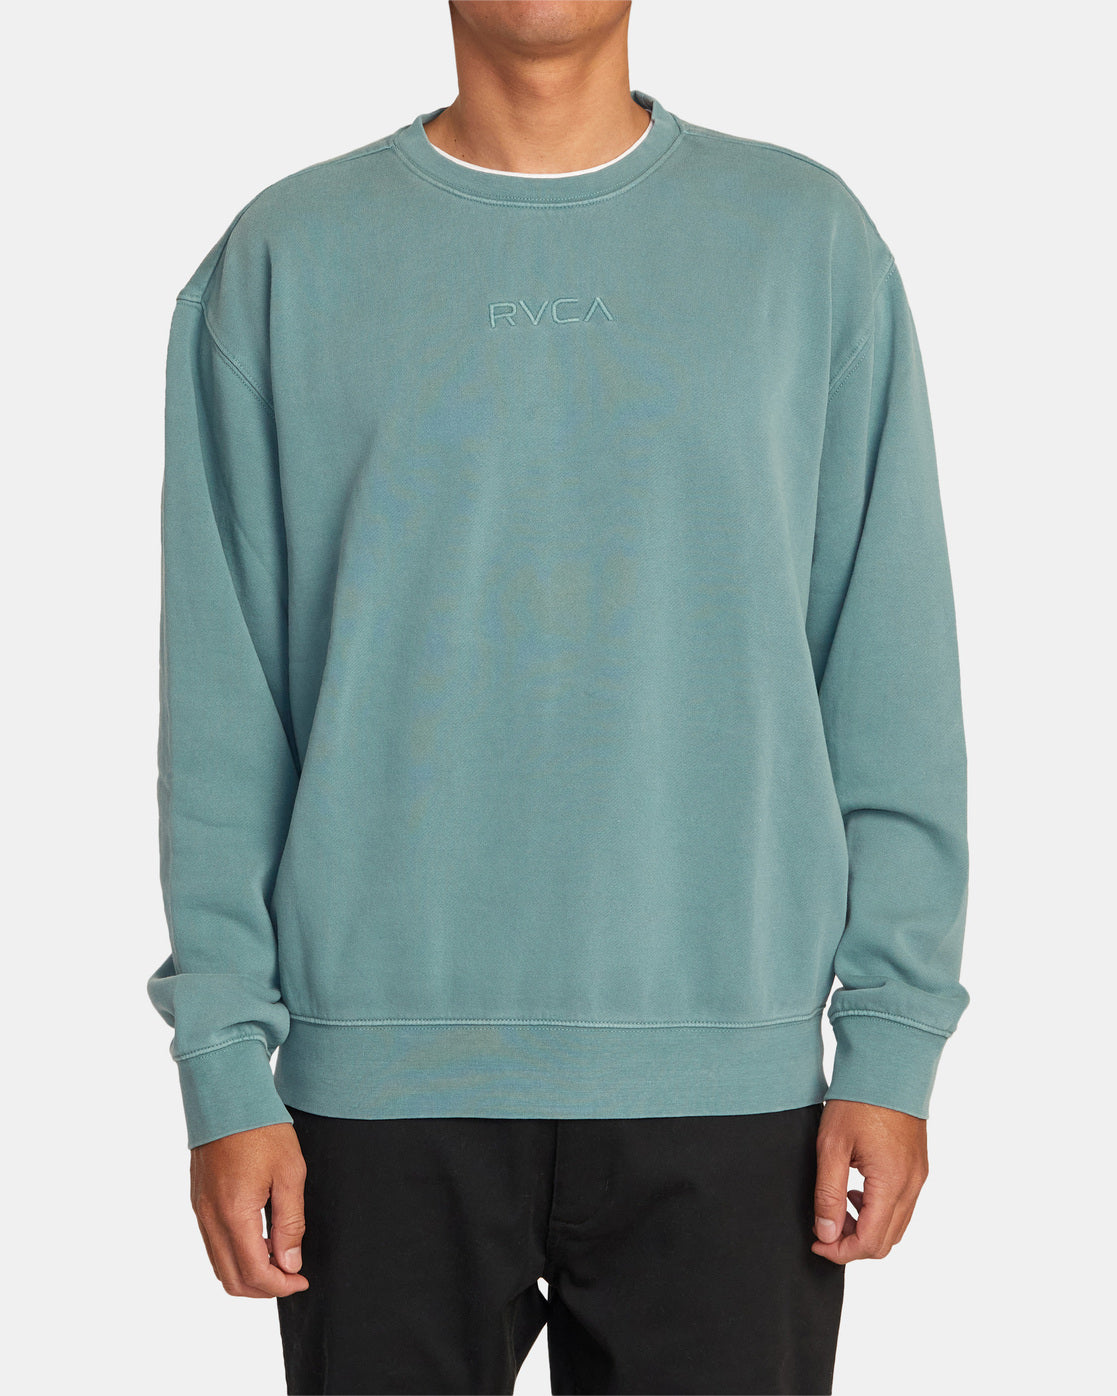 PTC Sweatshirt - Evergreen – RVCA